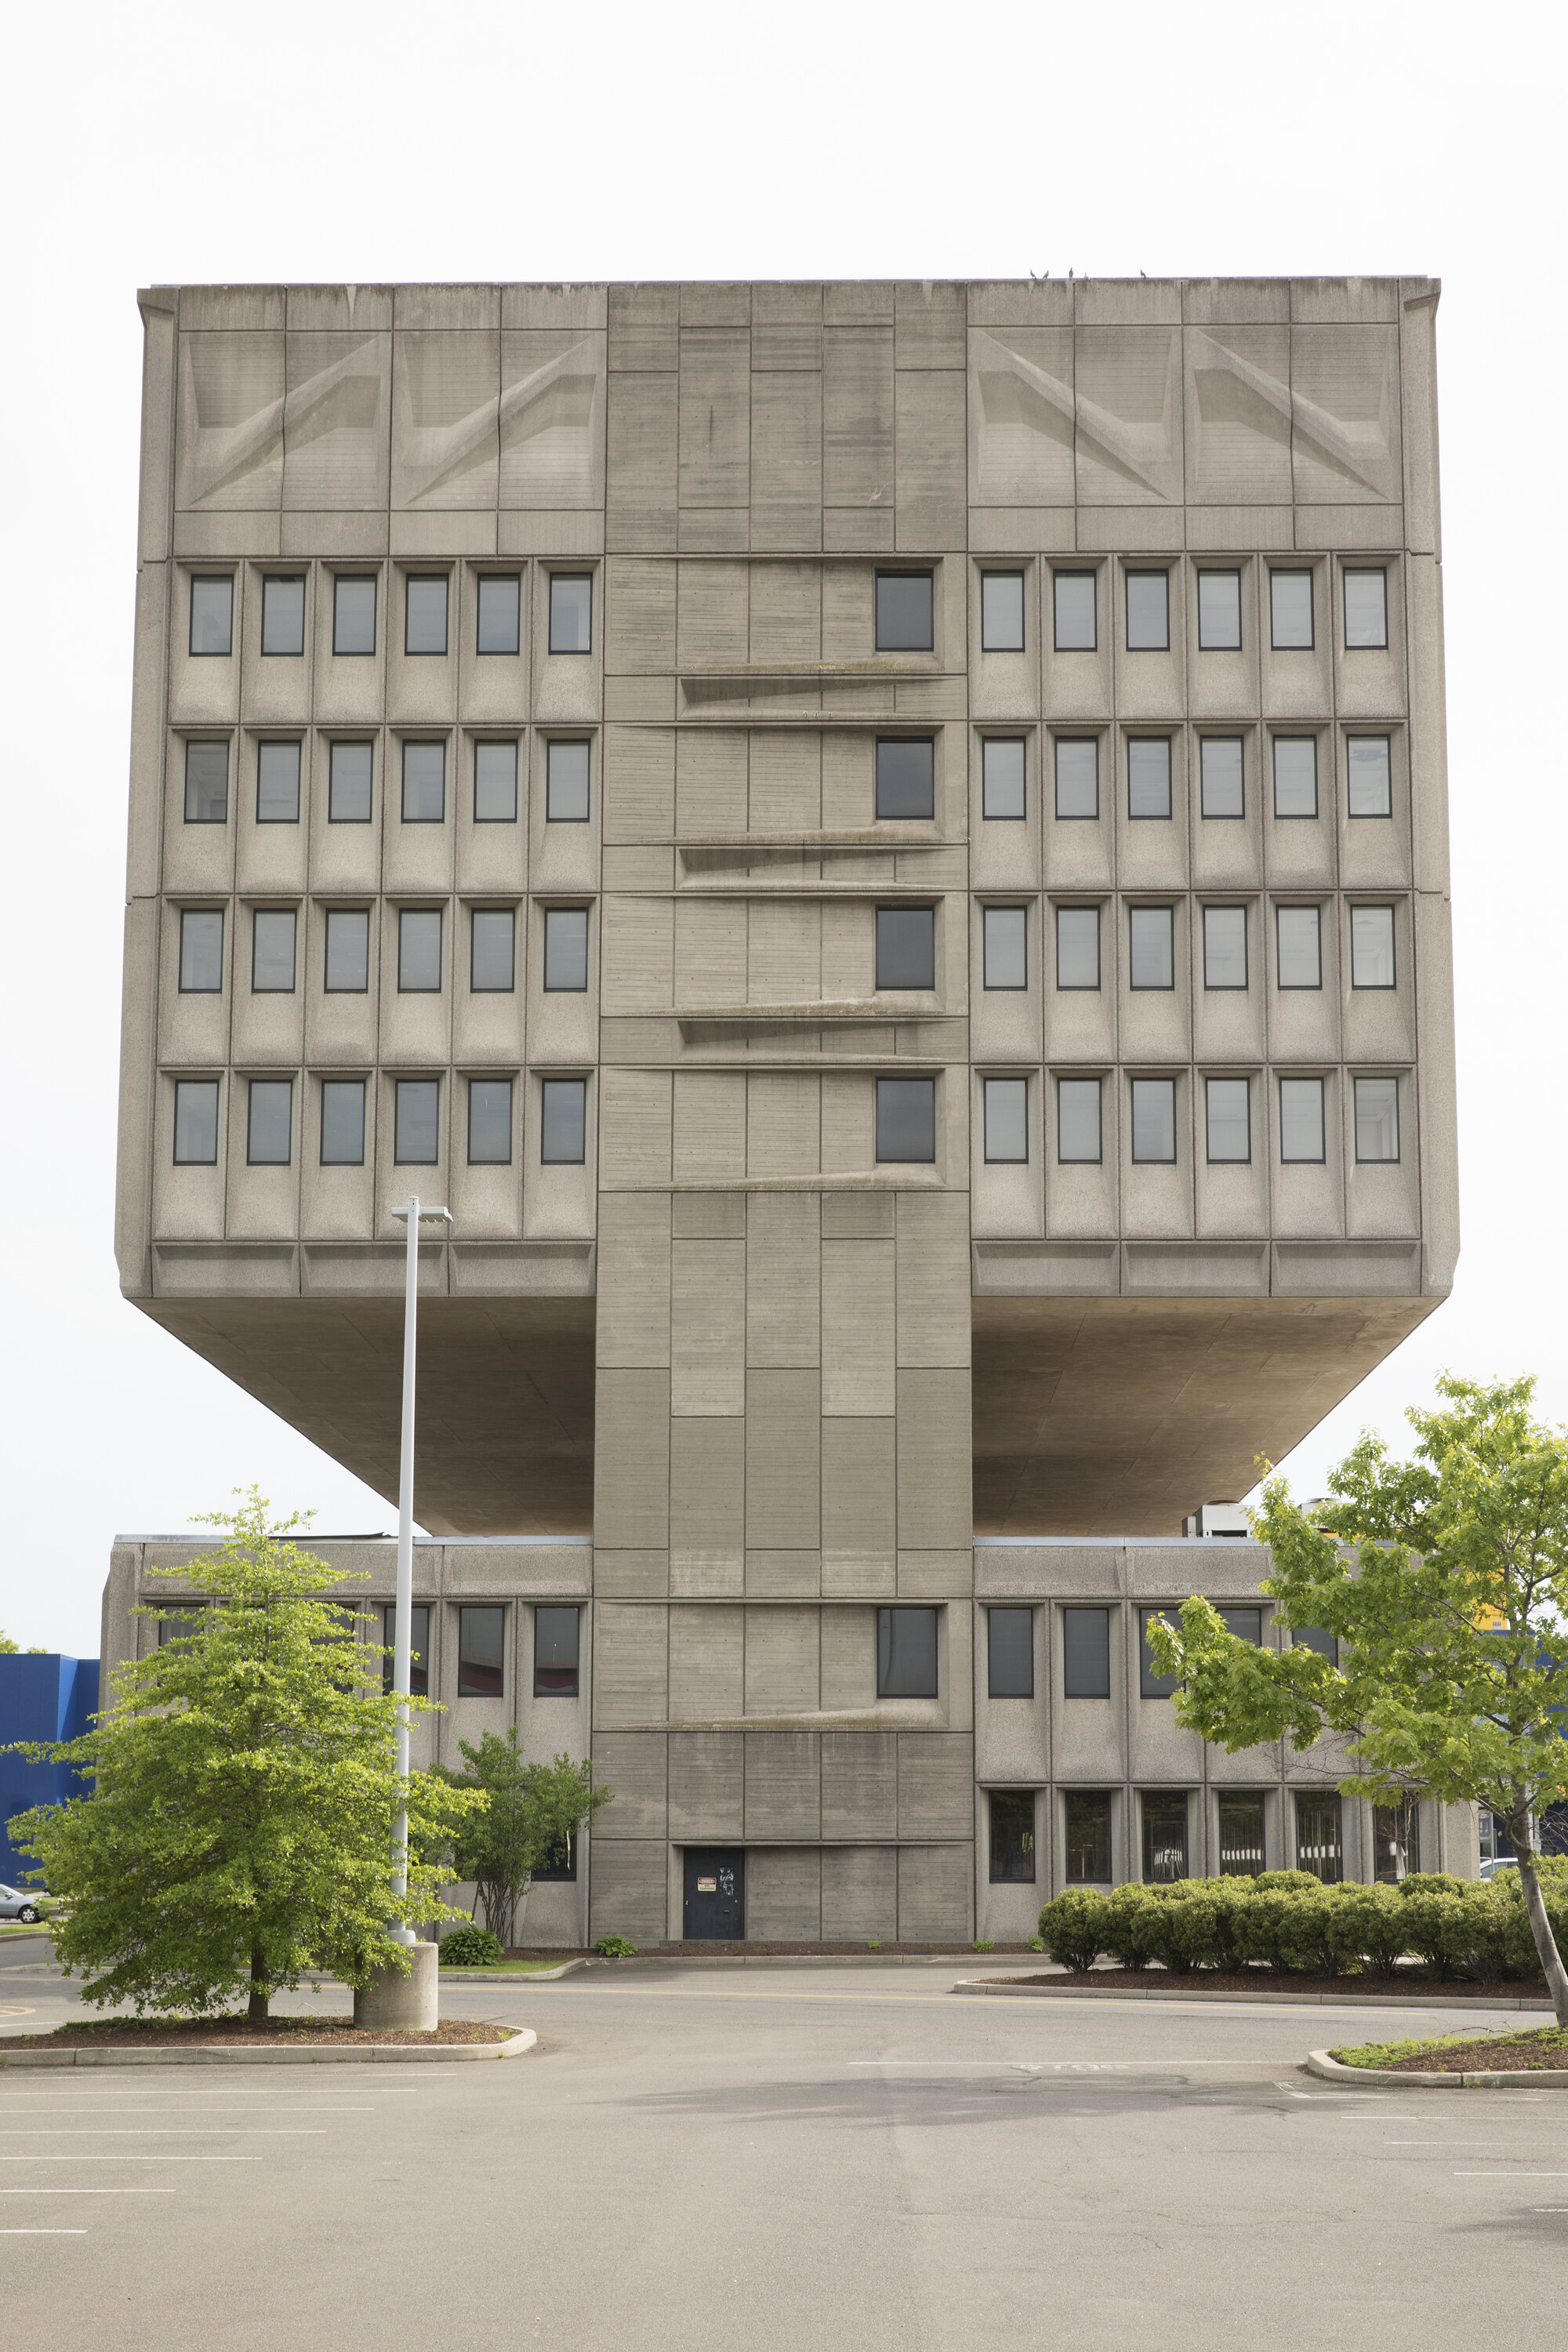 Pirelli Building by Marcel Breuer, New Haven, CT